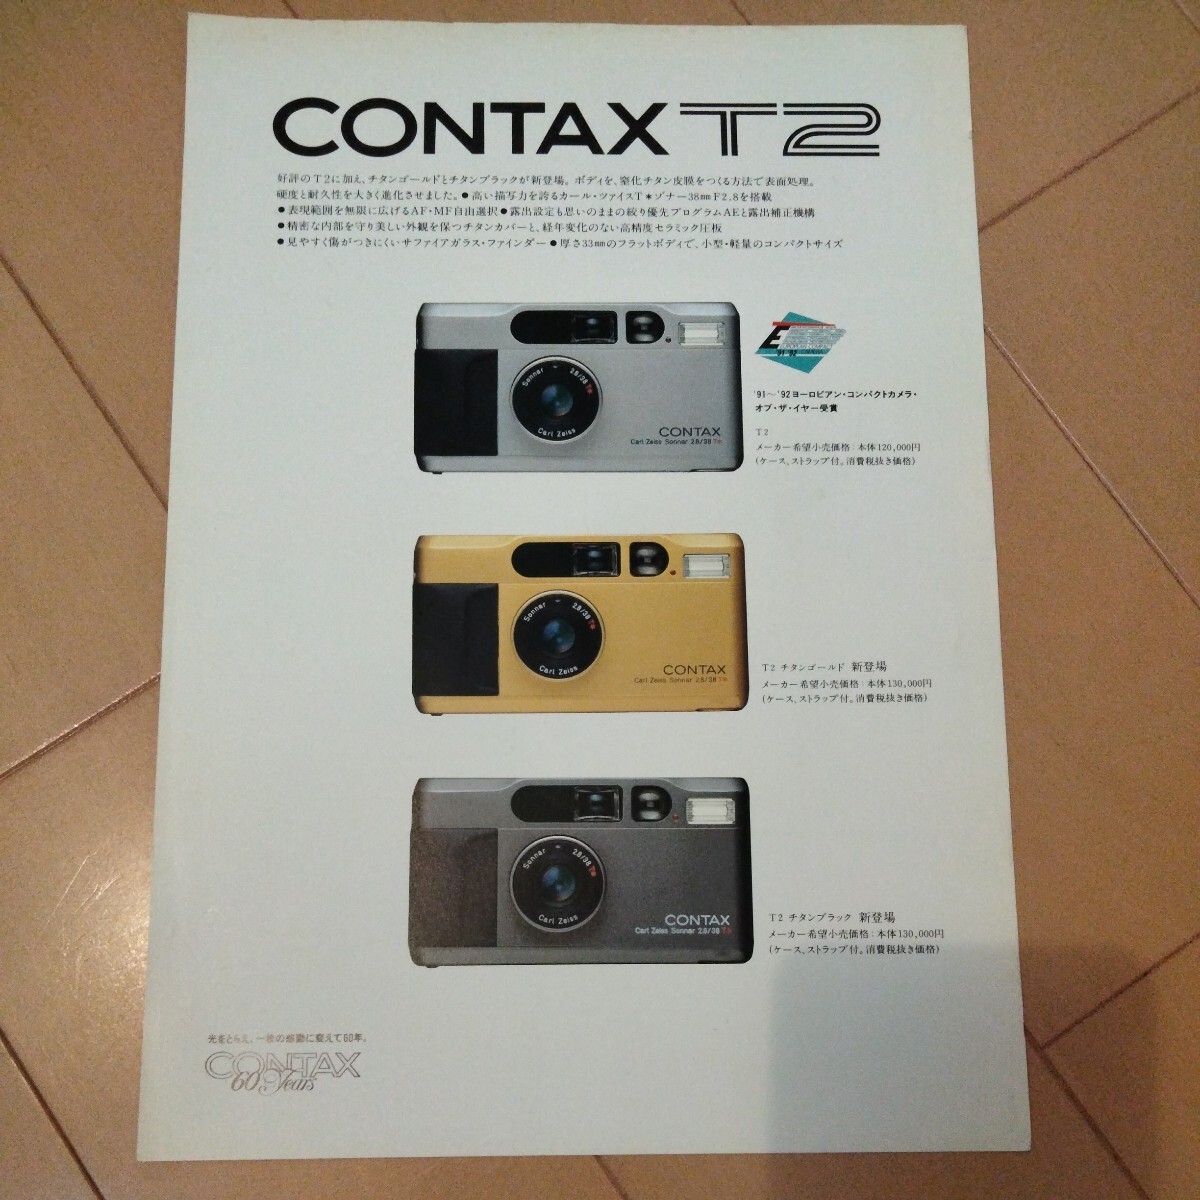 CONTAX T2 Contax T2 catalog 